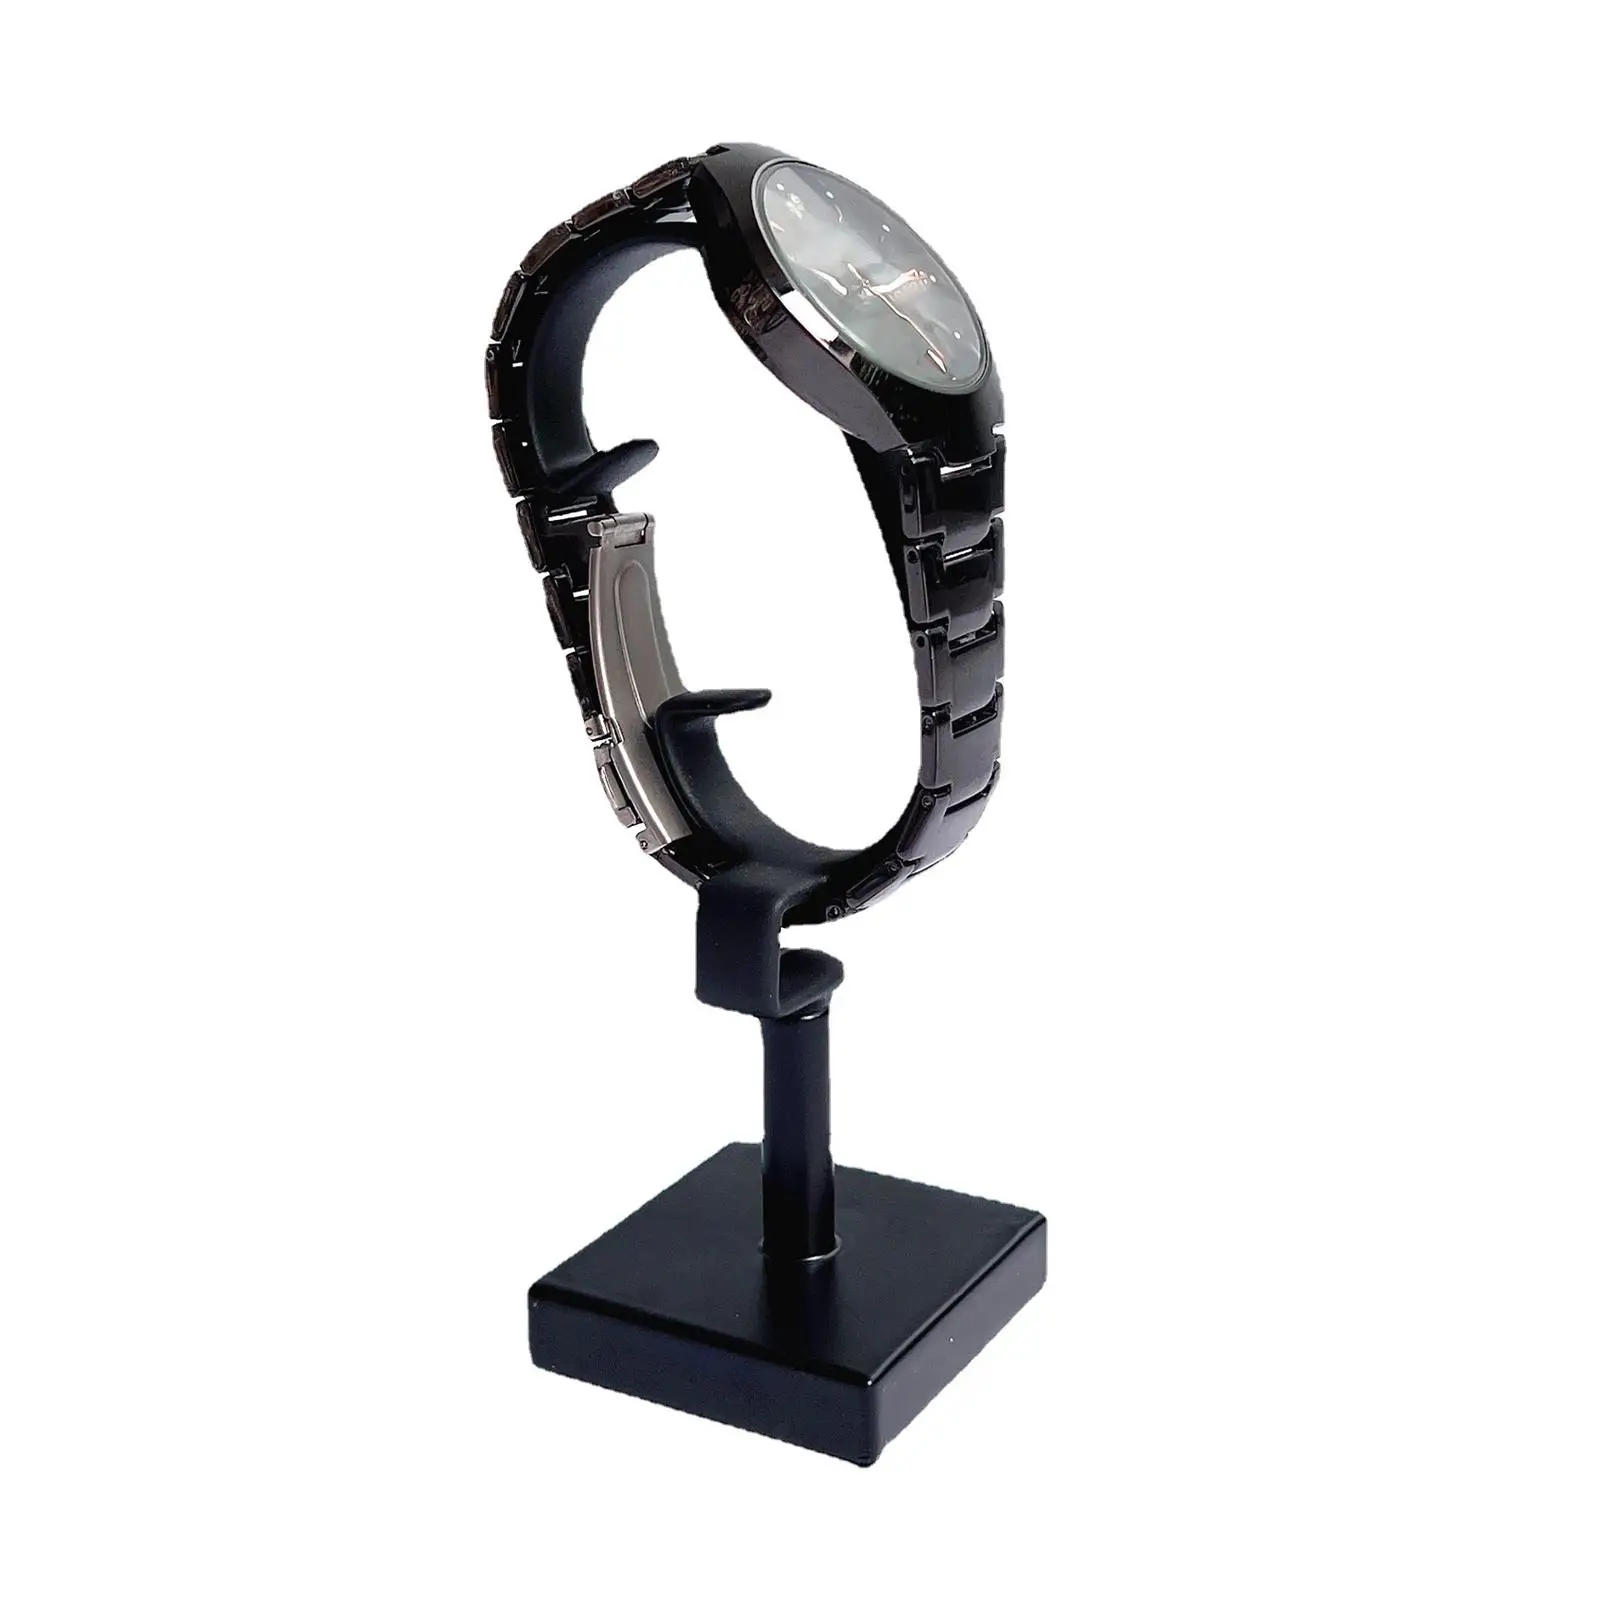 Durable Watch Display Stand Home Decor black Freestanding Gift Multipurpose Stable Bracelet Holder for Desktop Showcase